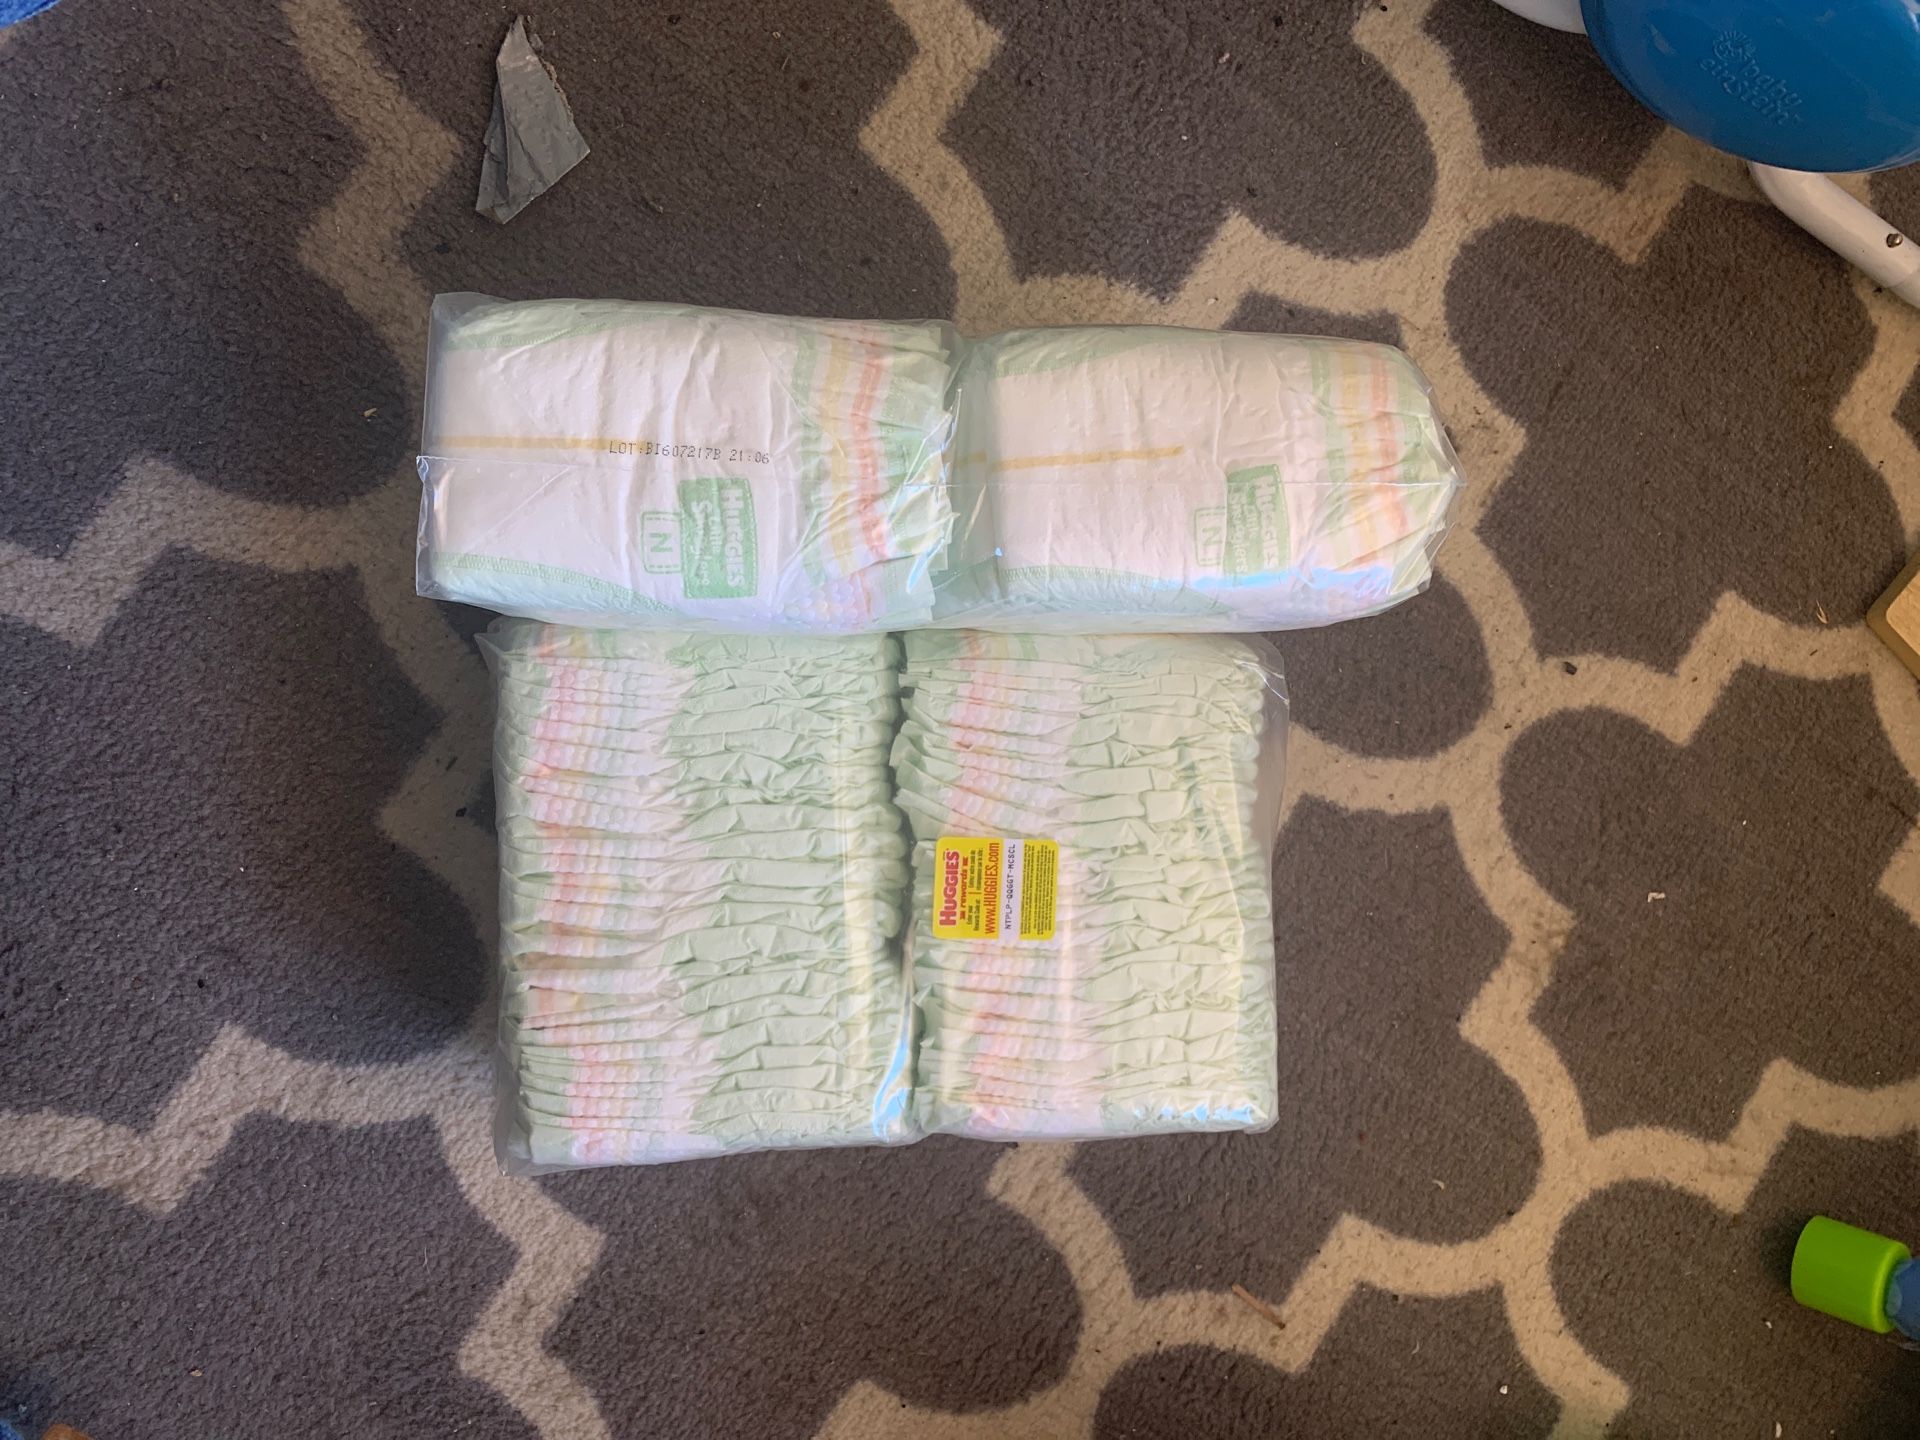 88 newborn diapers